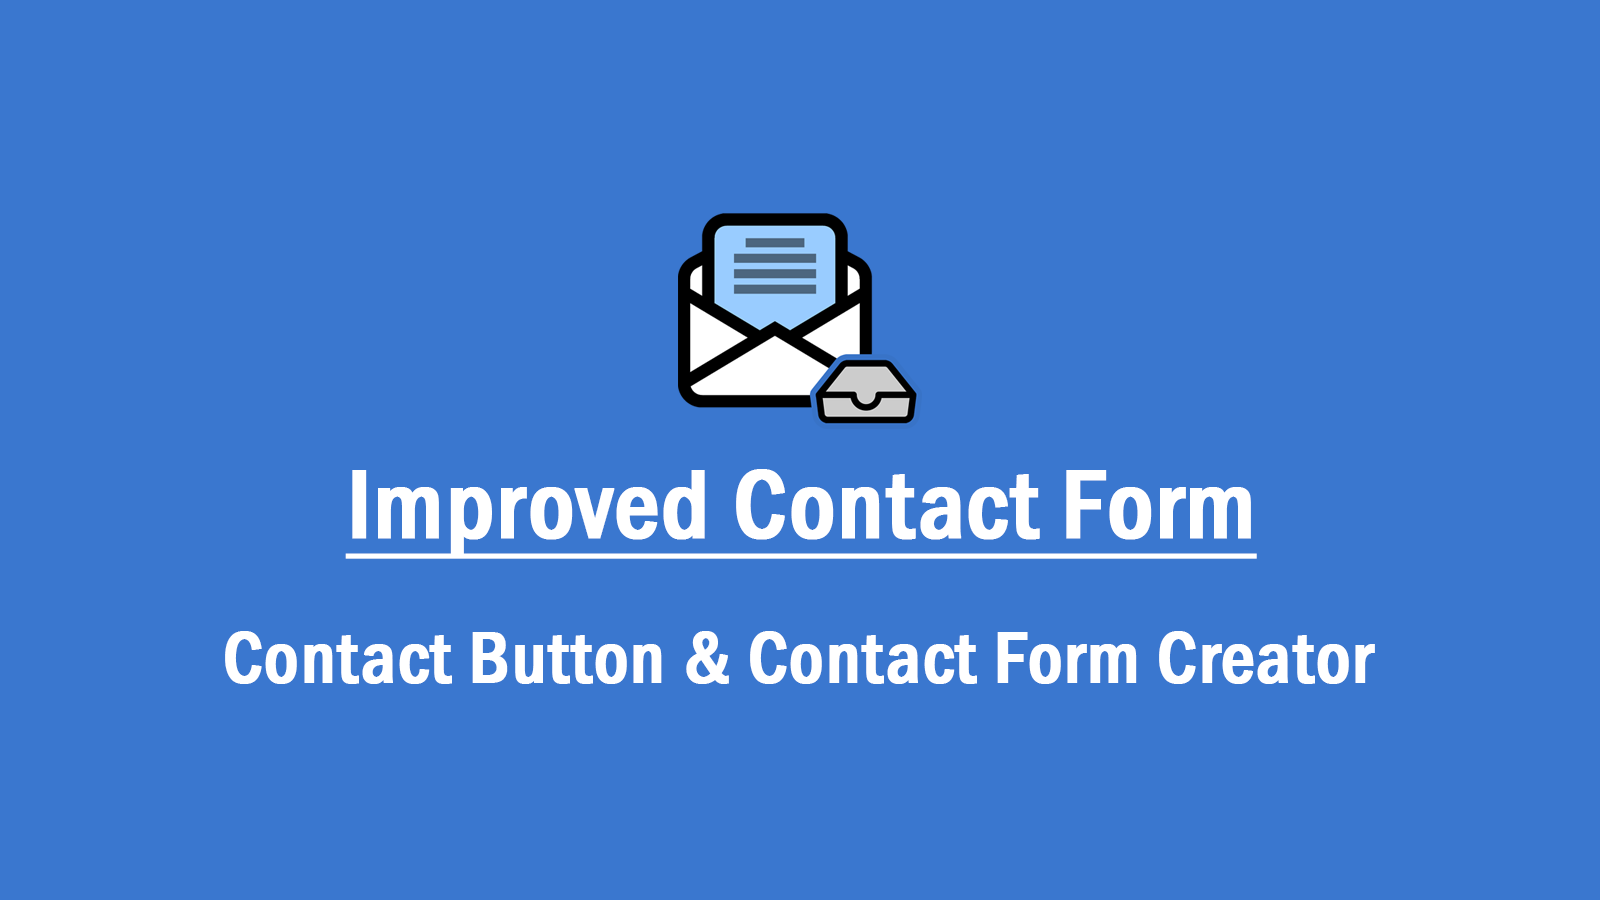 Contact Button & Contact Form Creator